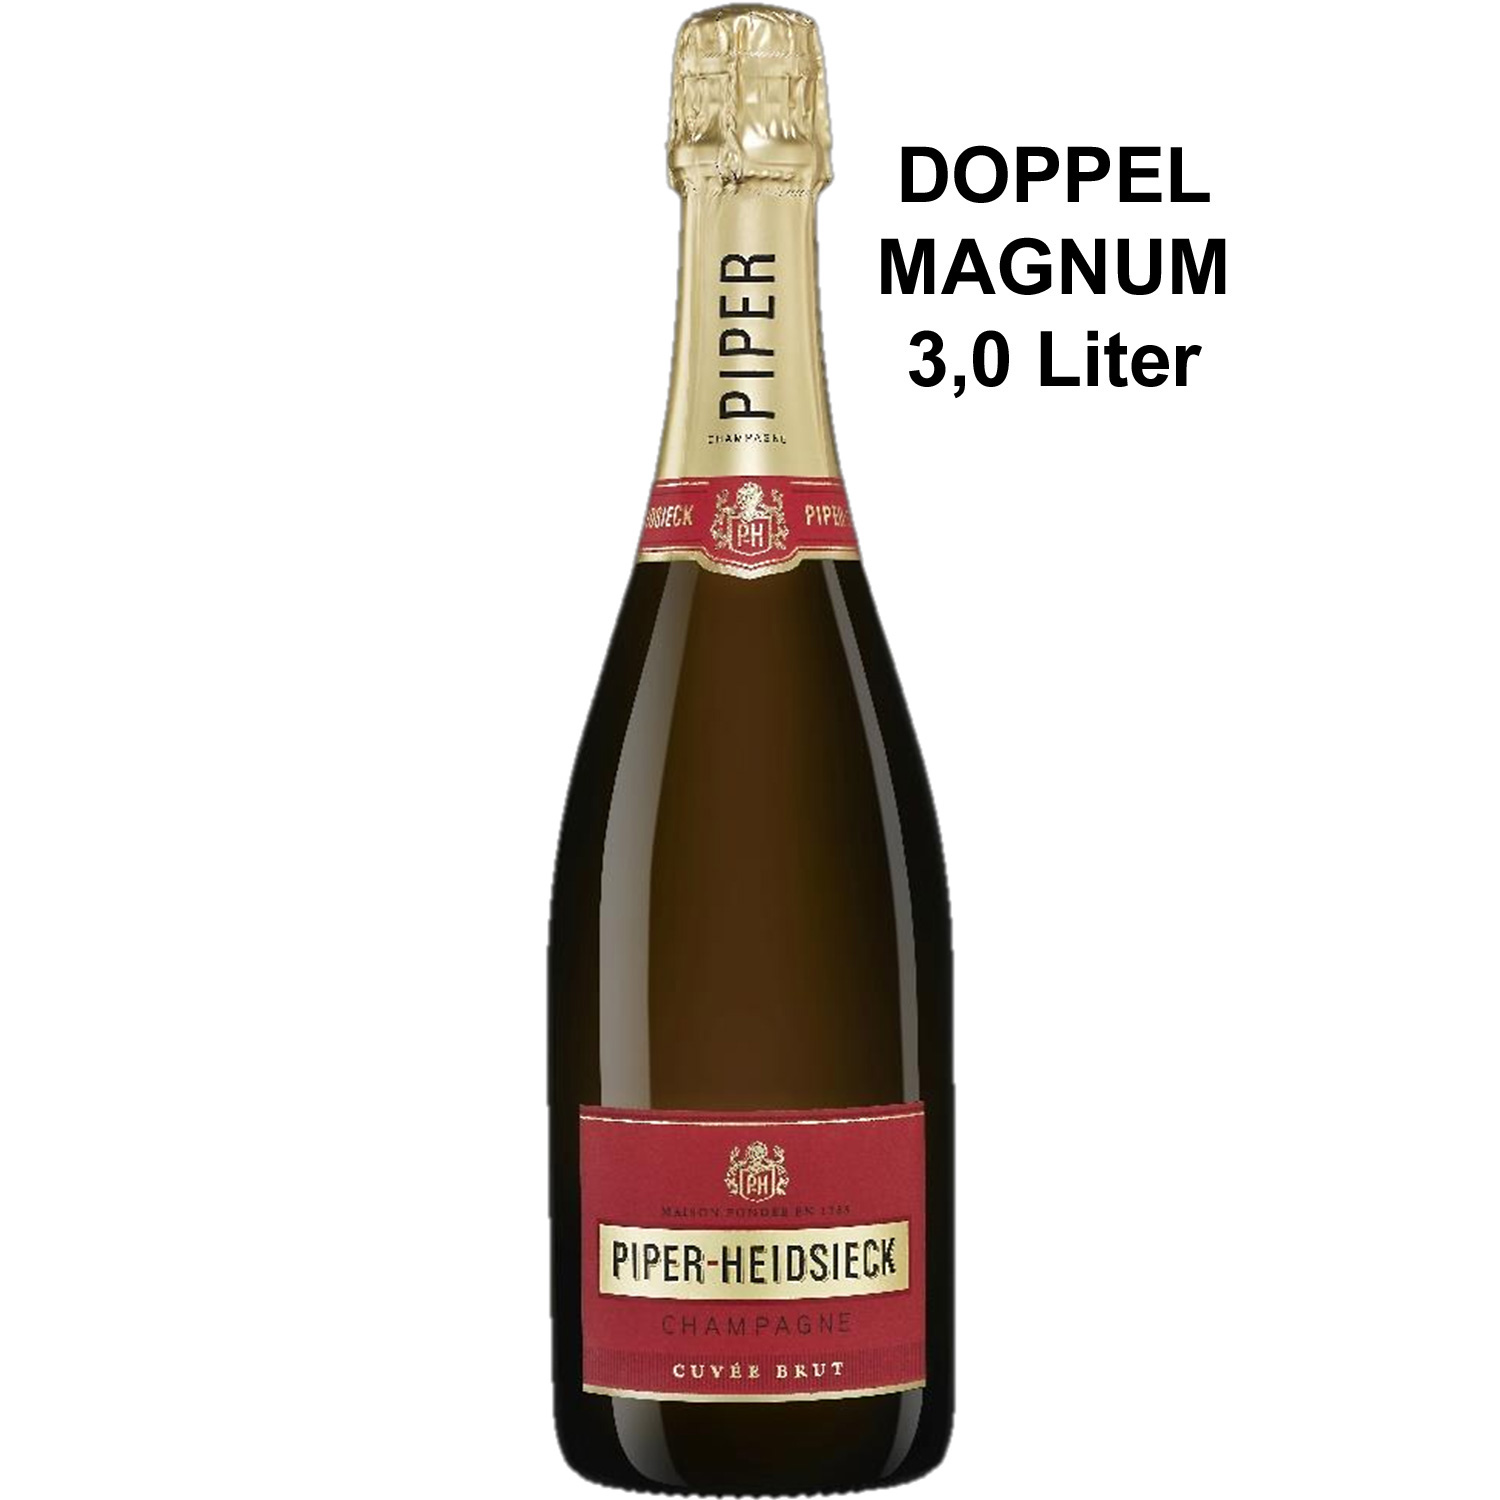 Champagne Piper-Heidsieck Cuvée Brut AOP Doppel-Magnum